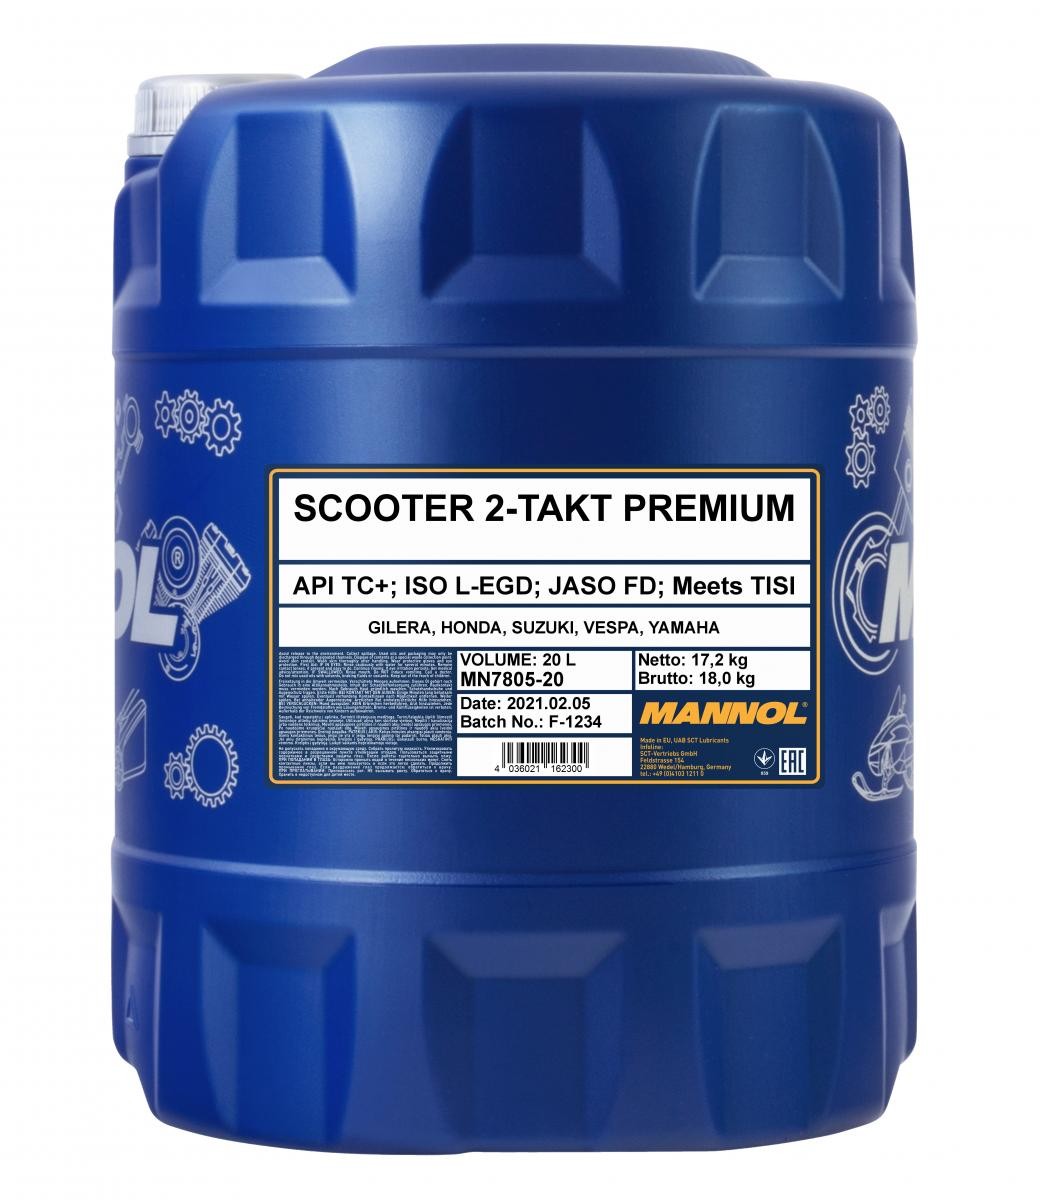 MANNOL Scooter, 2-Takt Premium 20l Motor oil MN7805-20 buy